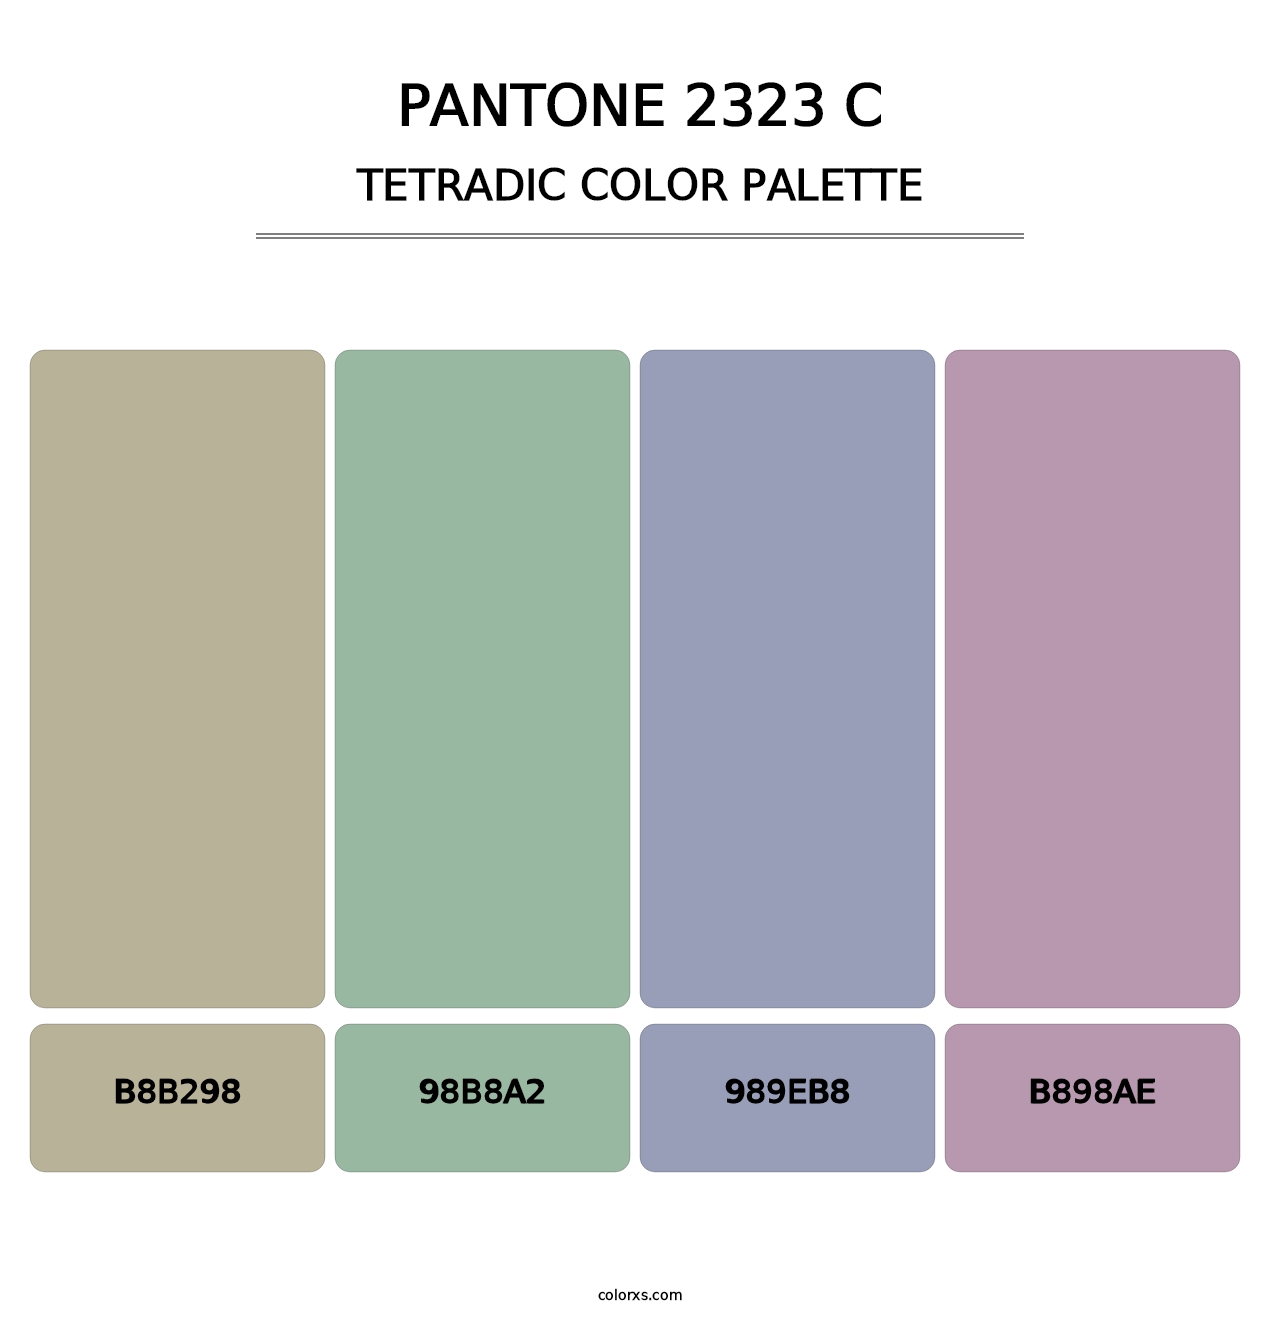 PANTONE 2323 C - Tetradic Color Palette